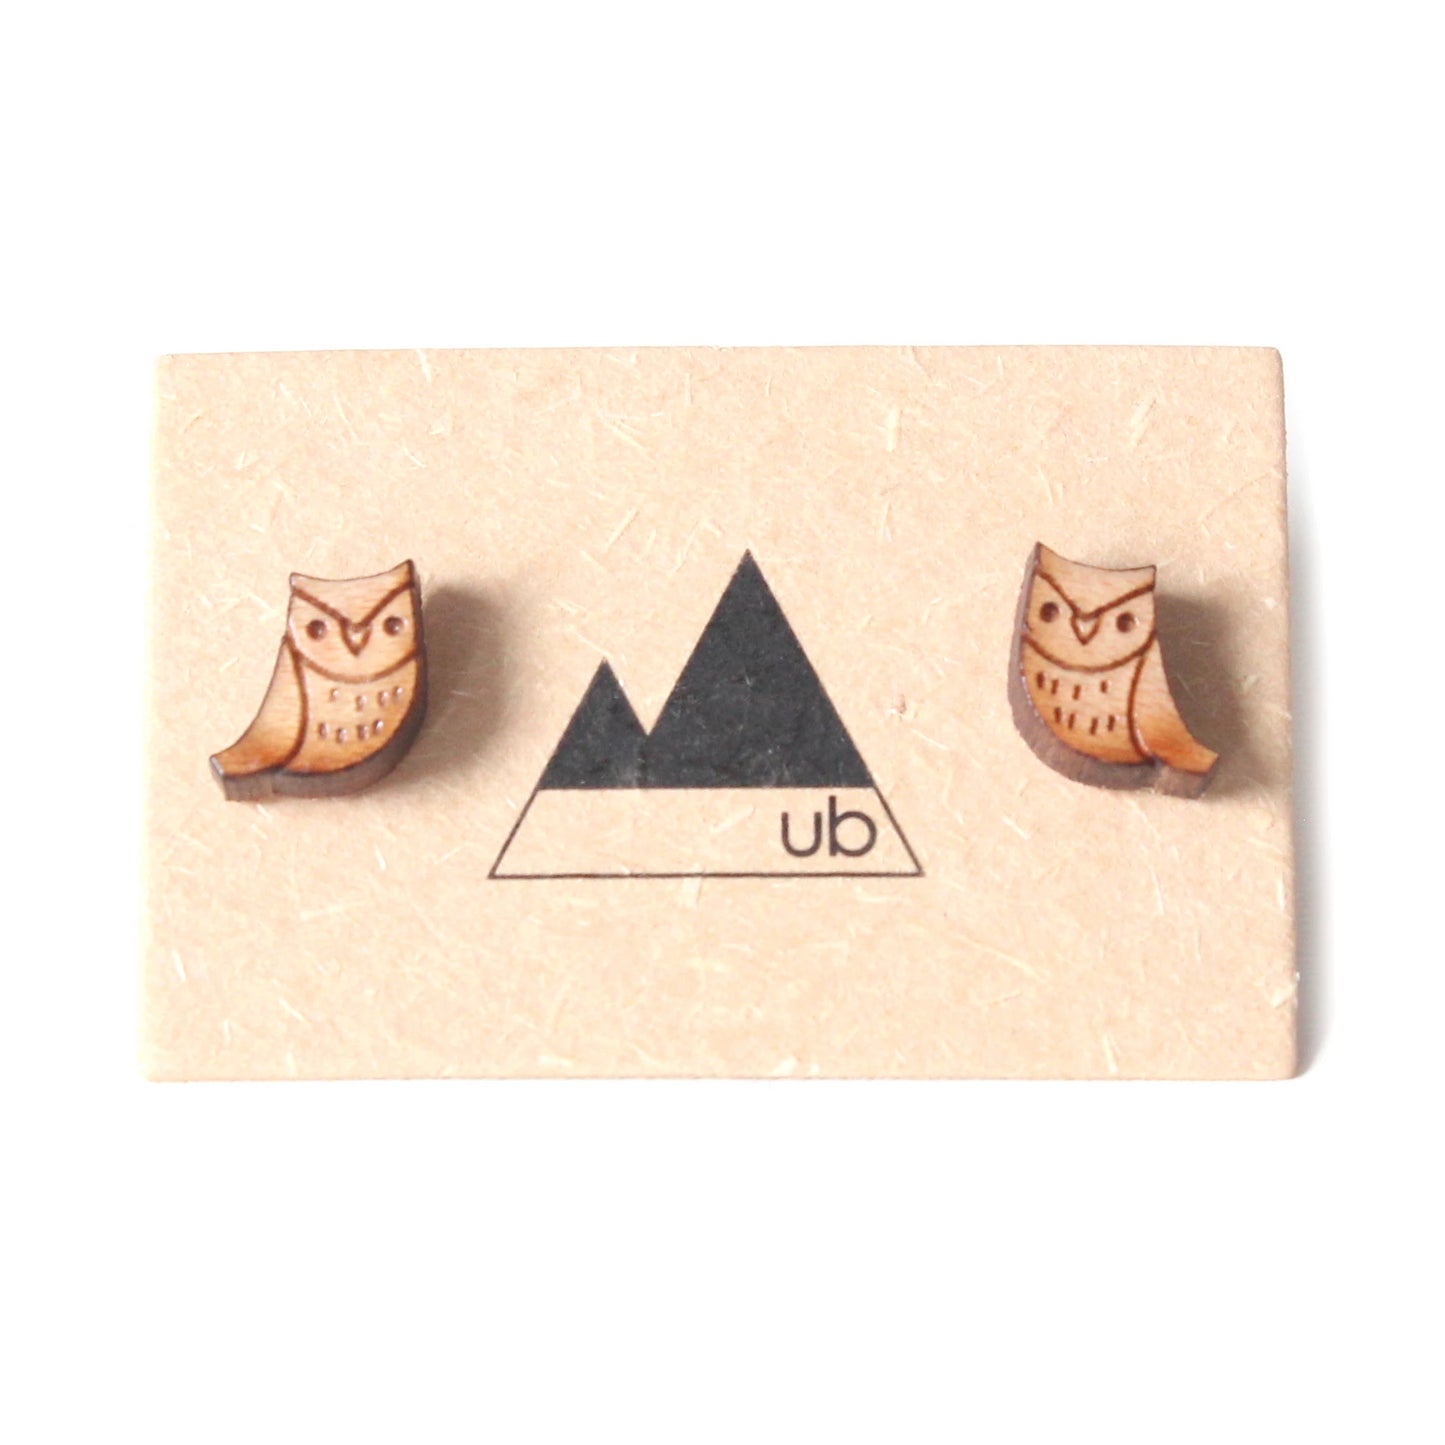 Made in Canada wooden owl stud earrings.